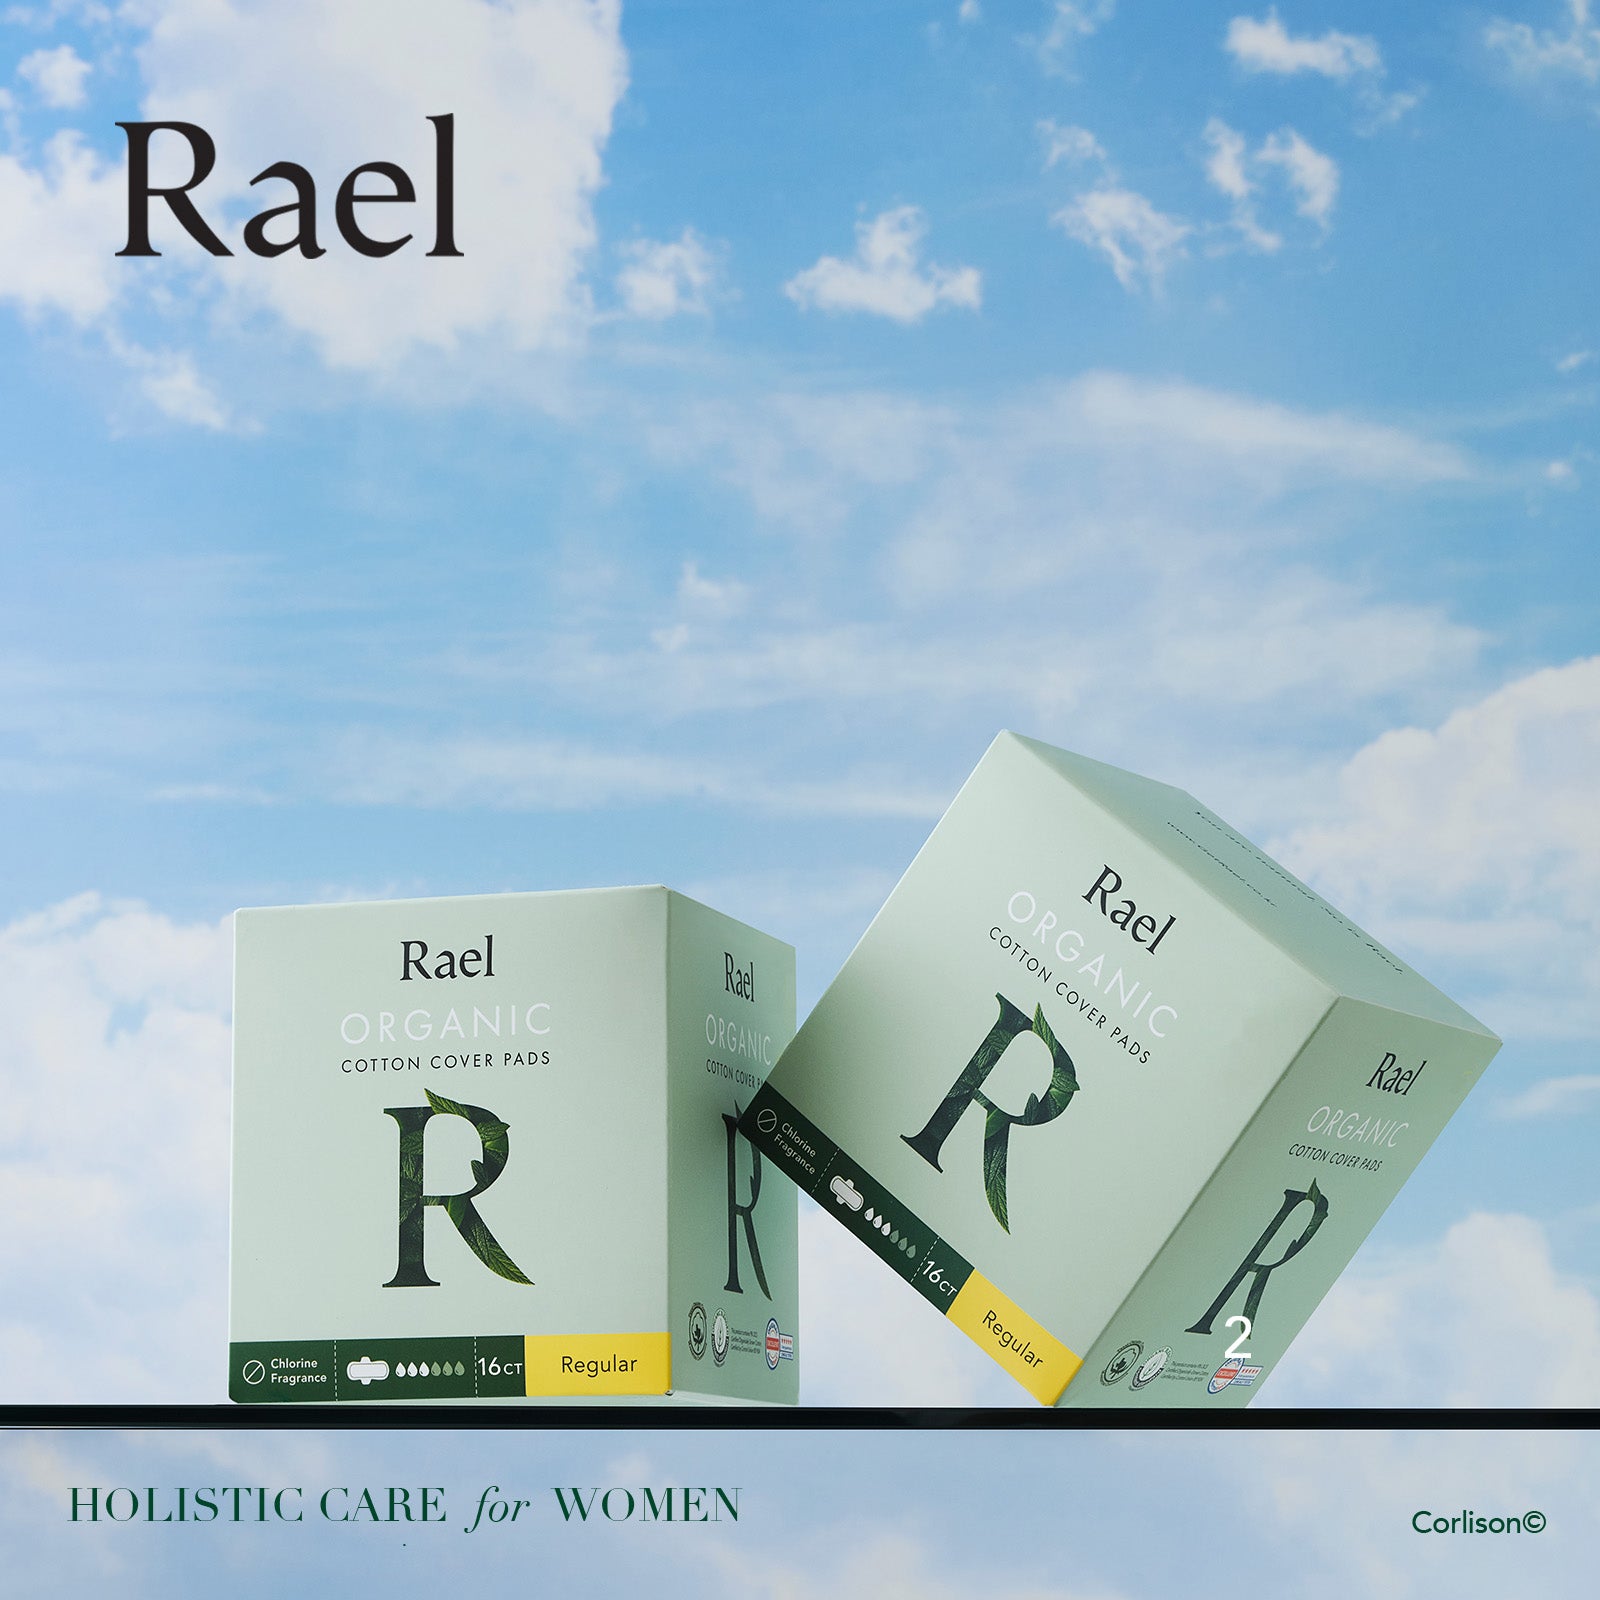 Rael Organic Cotton Overnight Pads 12's